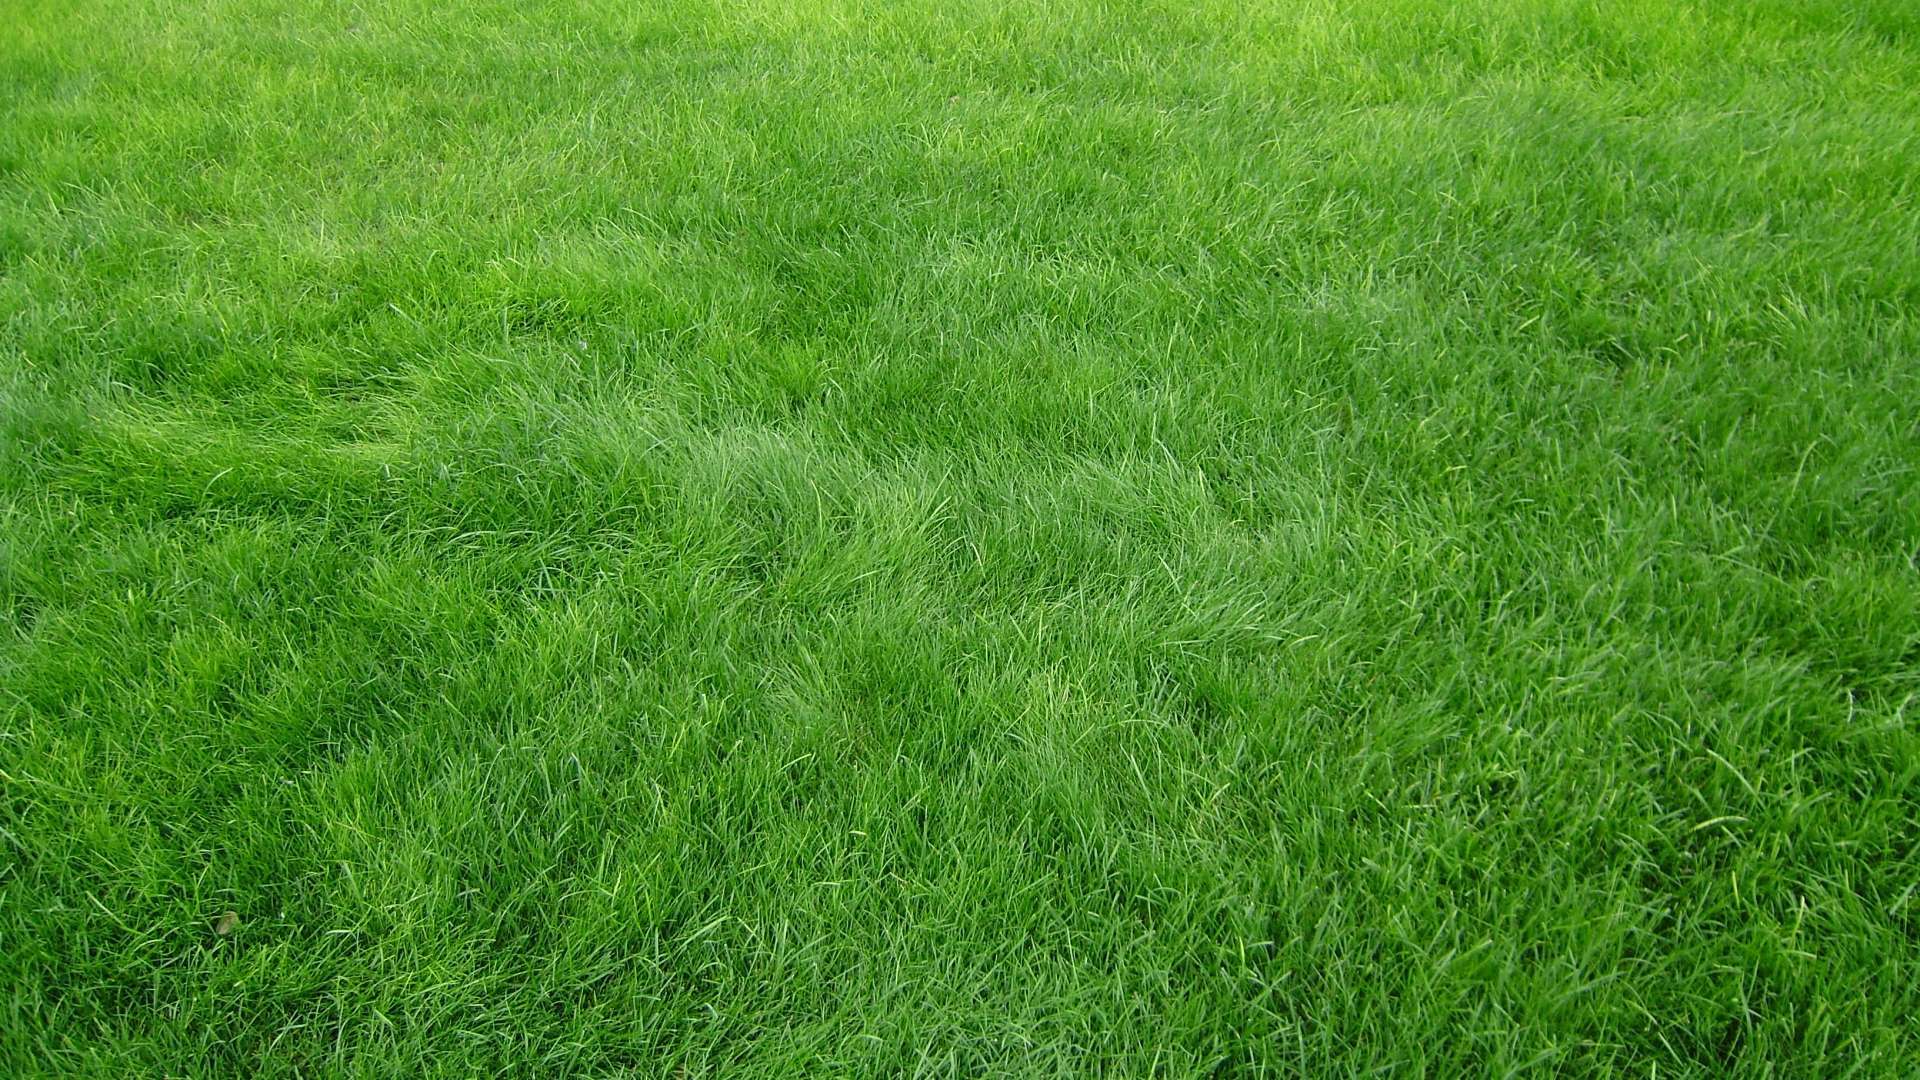 Wallpaper Grain Grass Field Green Hd Wallpaper 1080p Upload at June